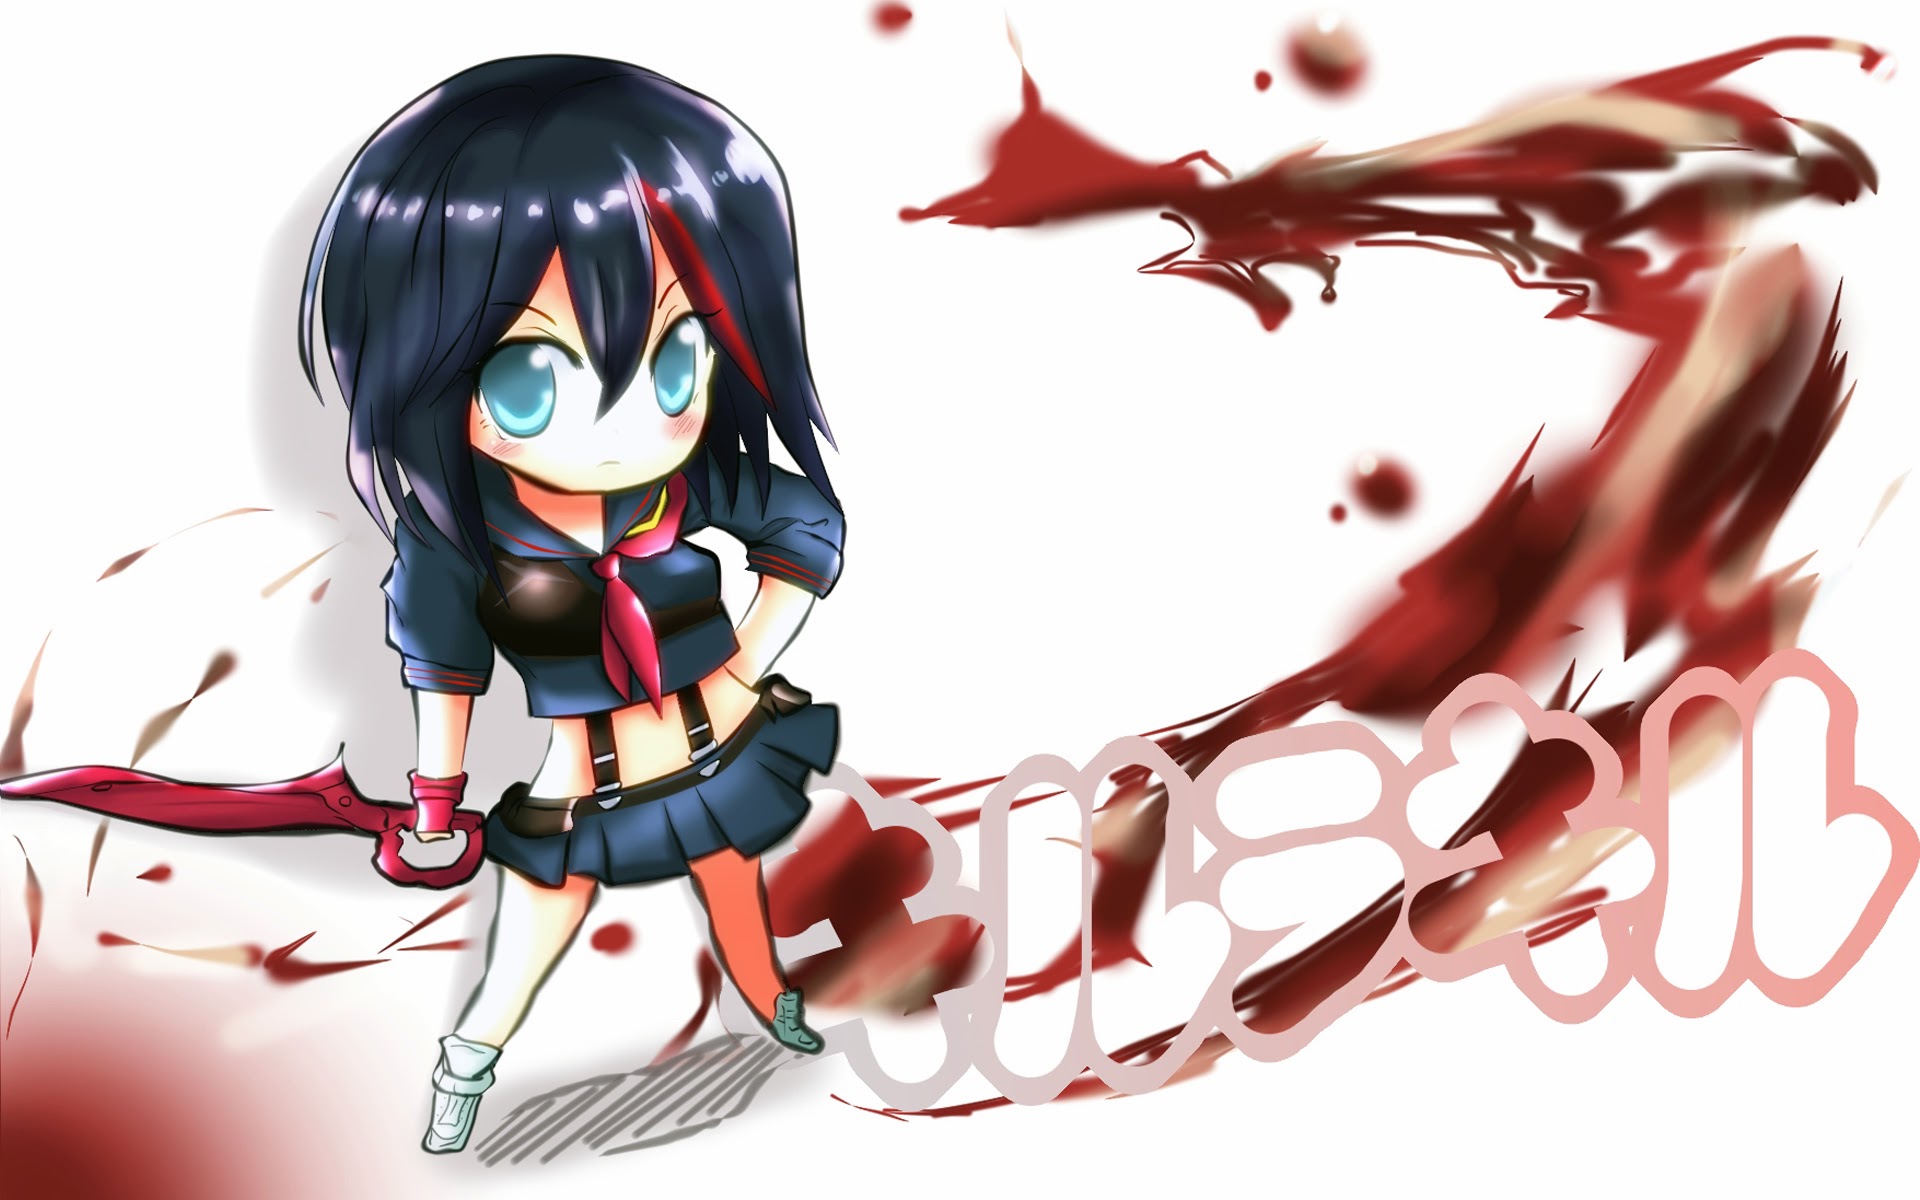  ryuko chibi kill la kill anime girl image hd wallpaper 1920x1200 4q 1920x1200